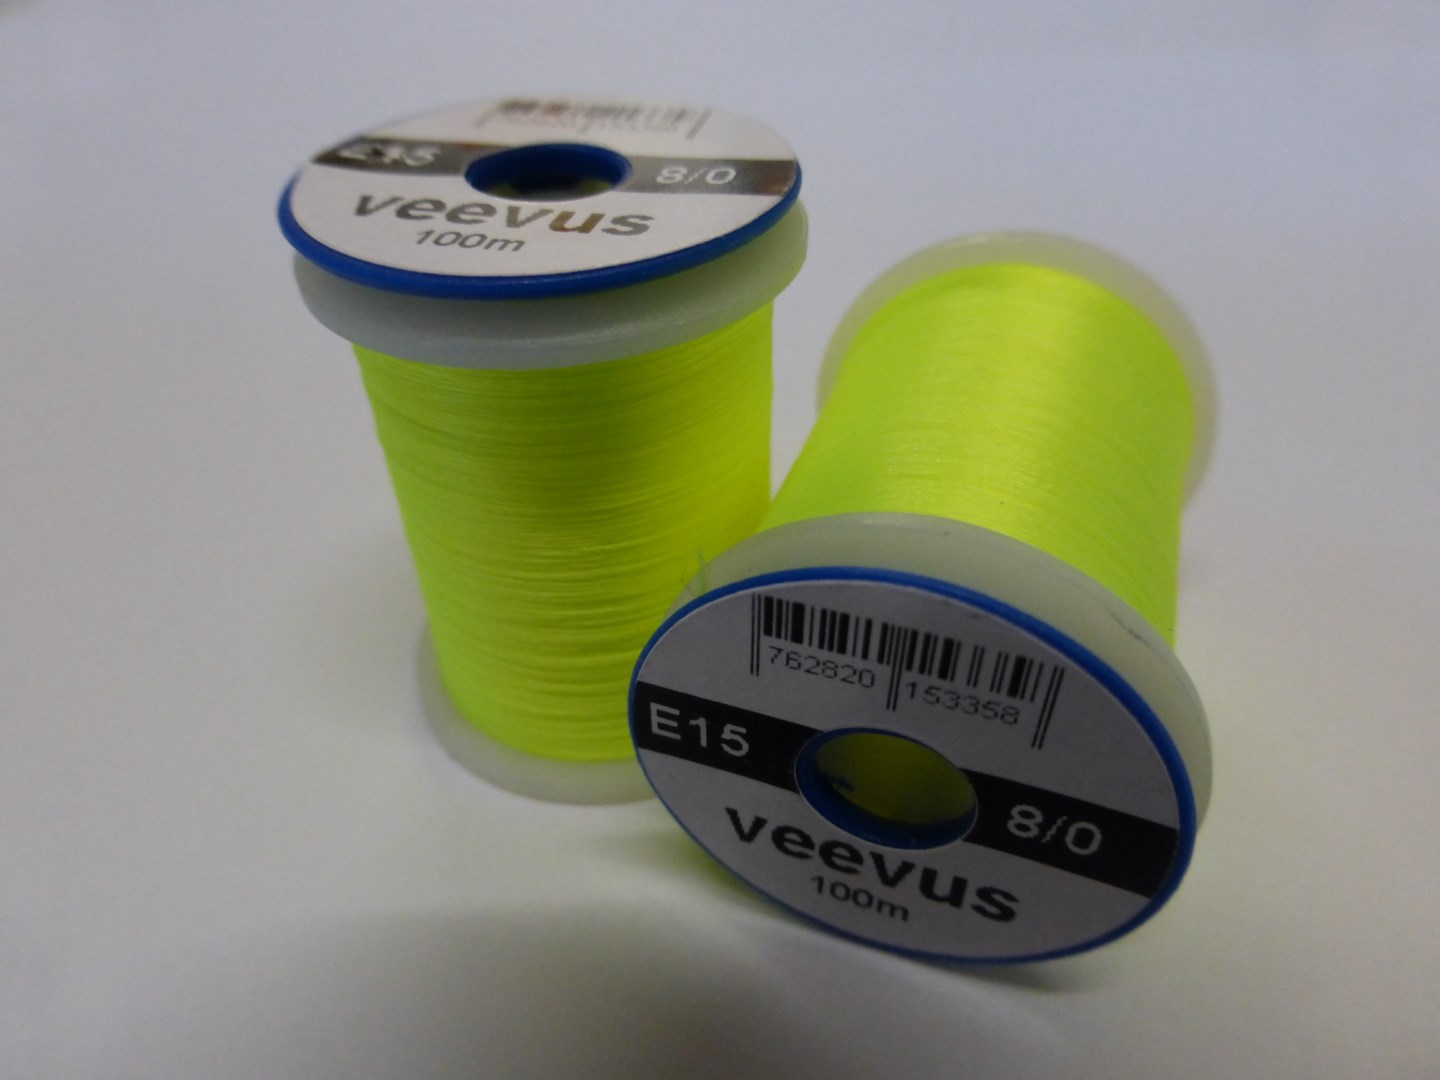 Veevus 8/0 Fluo Yellow E15